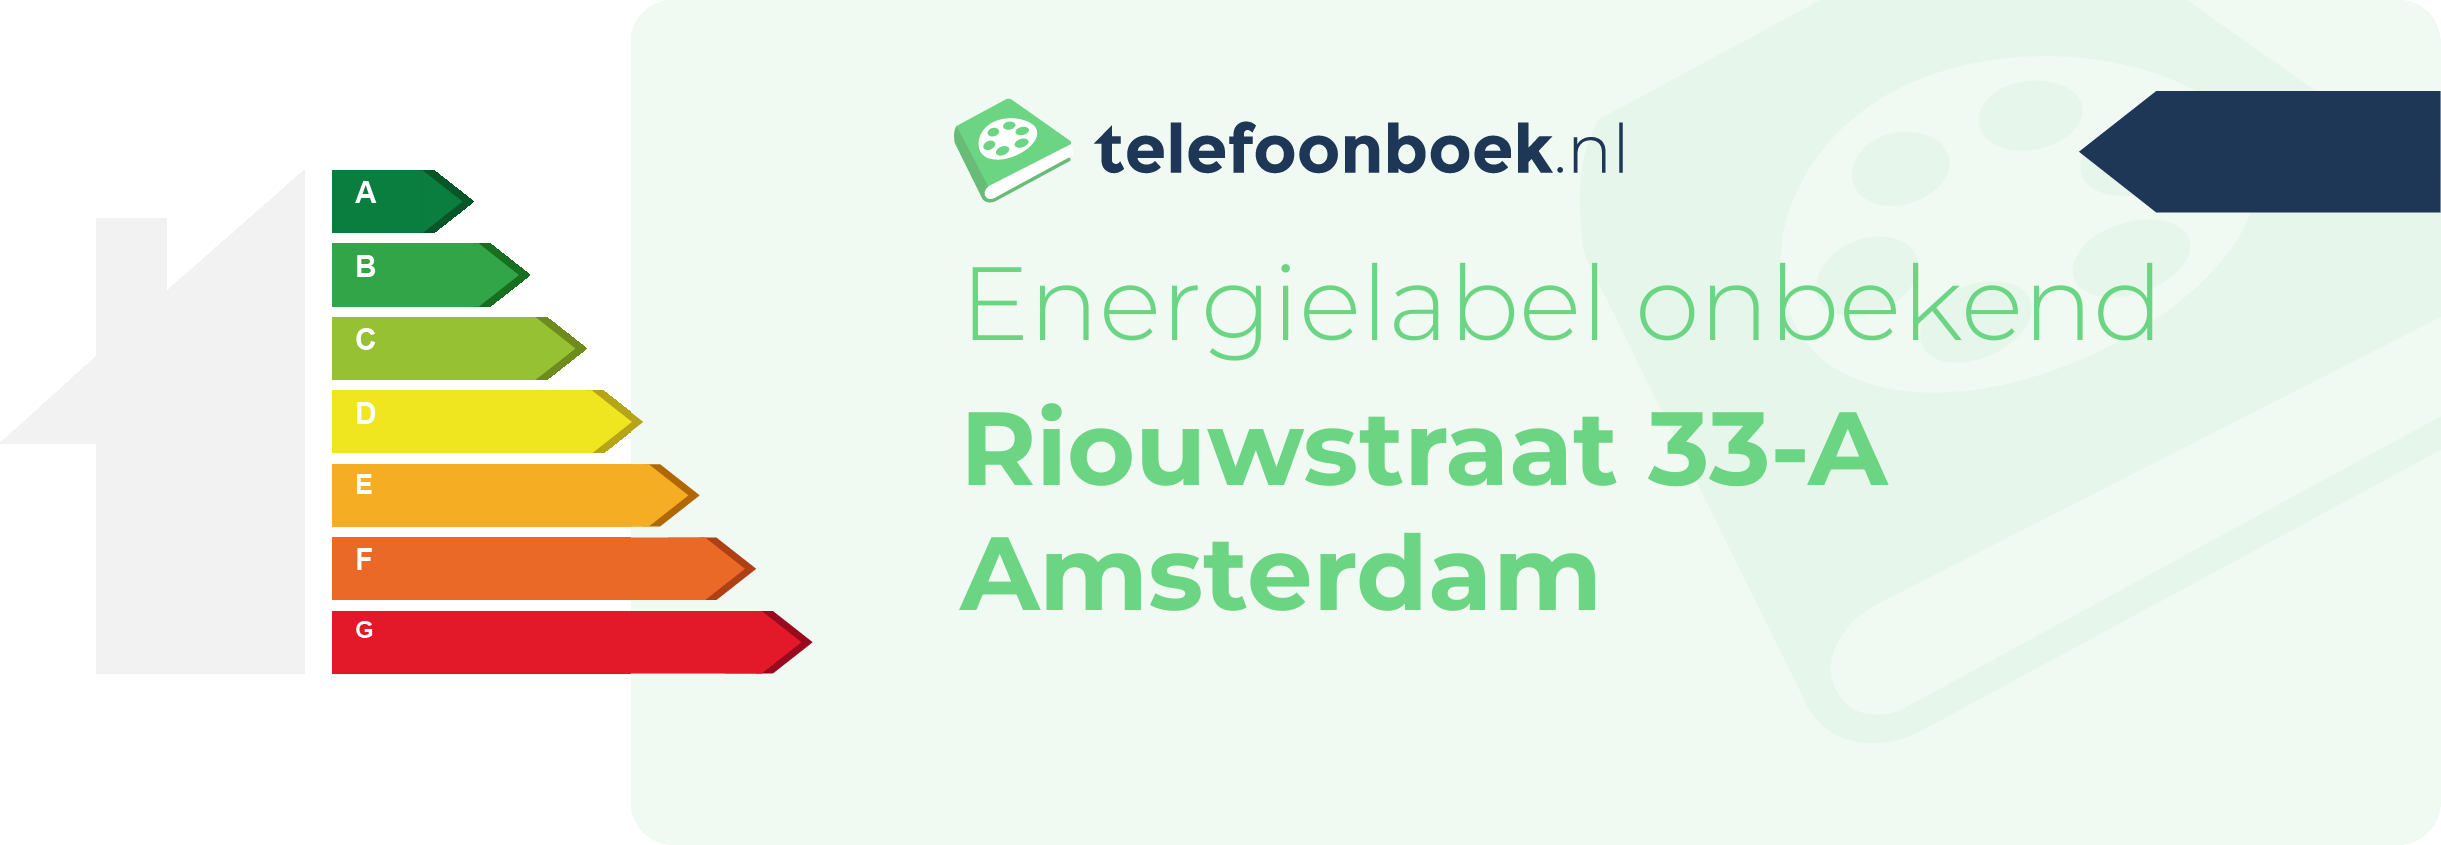 Energielabel Riouwstraat 33-A Amsterdam